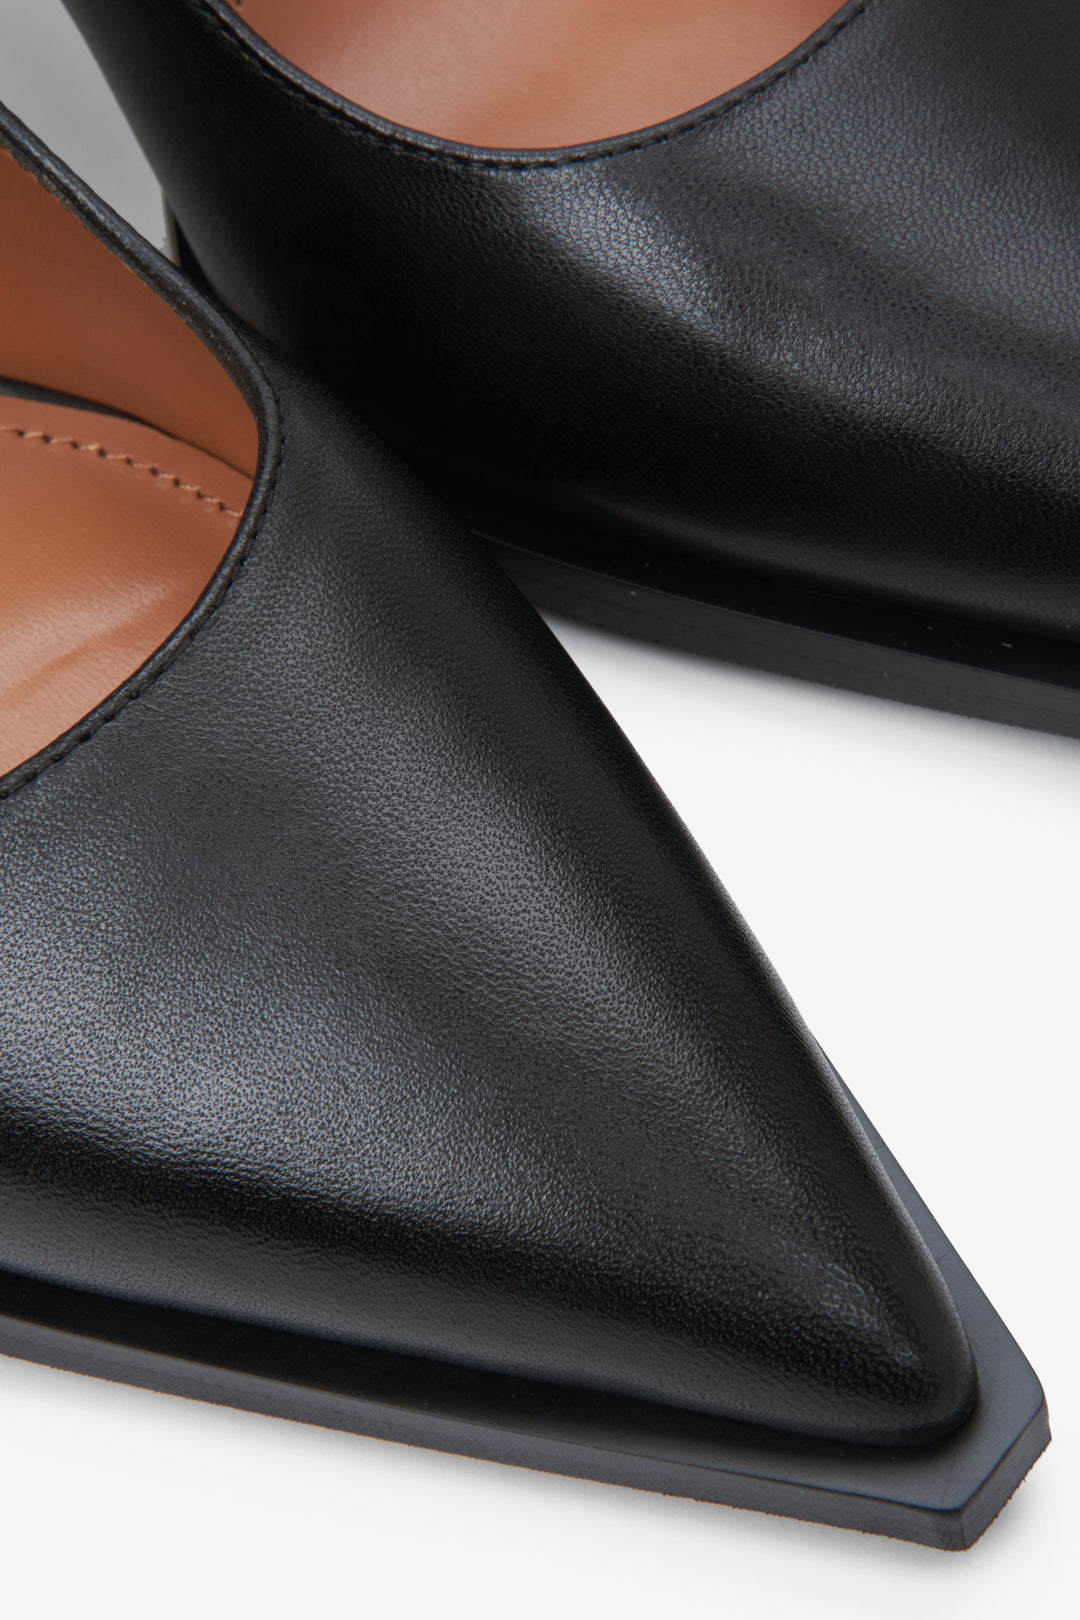 Women's black leather  pumps by Estro - close-up on detail.